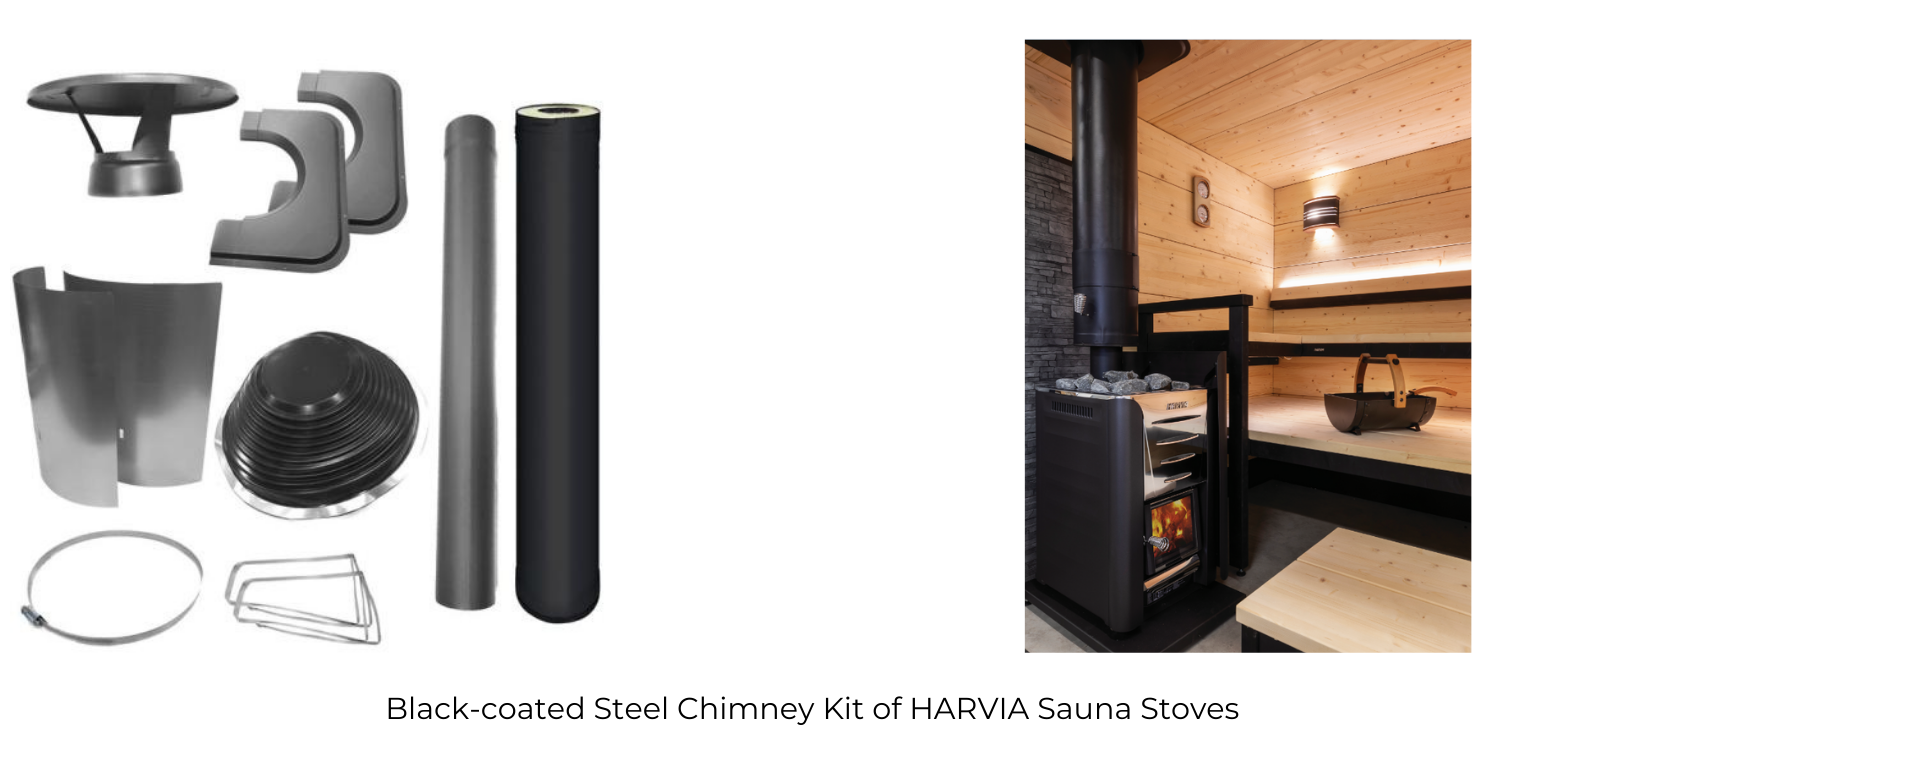 Harvia 20 PRO SL 24kW Wood-Burning Sauna Stove w/ Exterior Feed